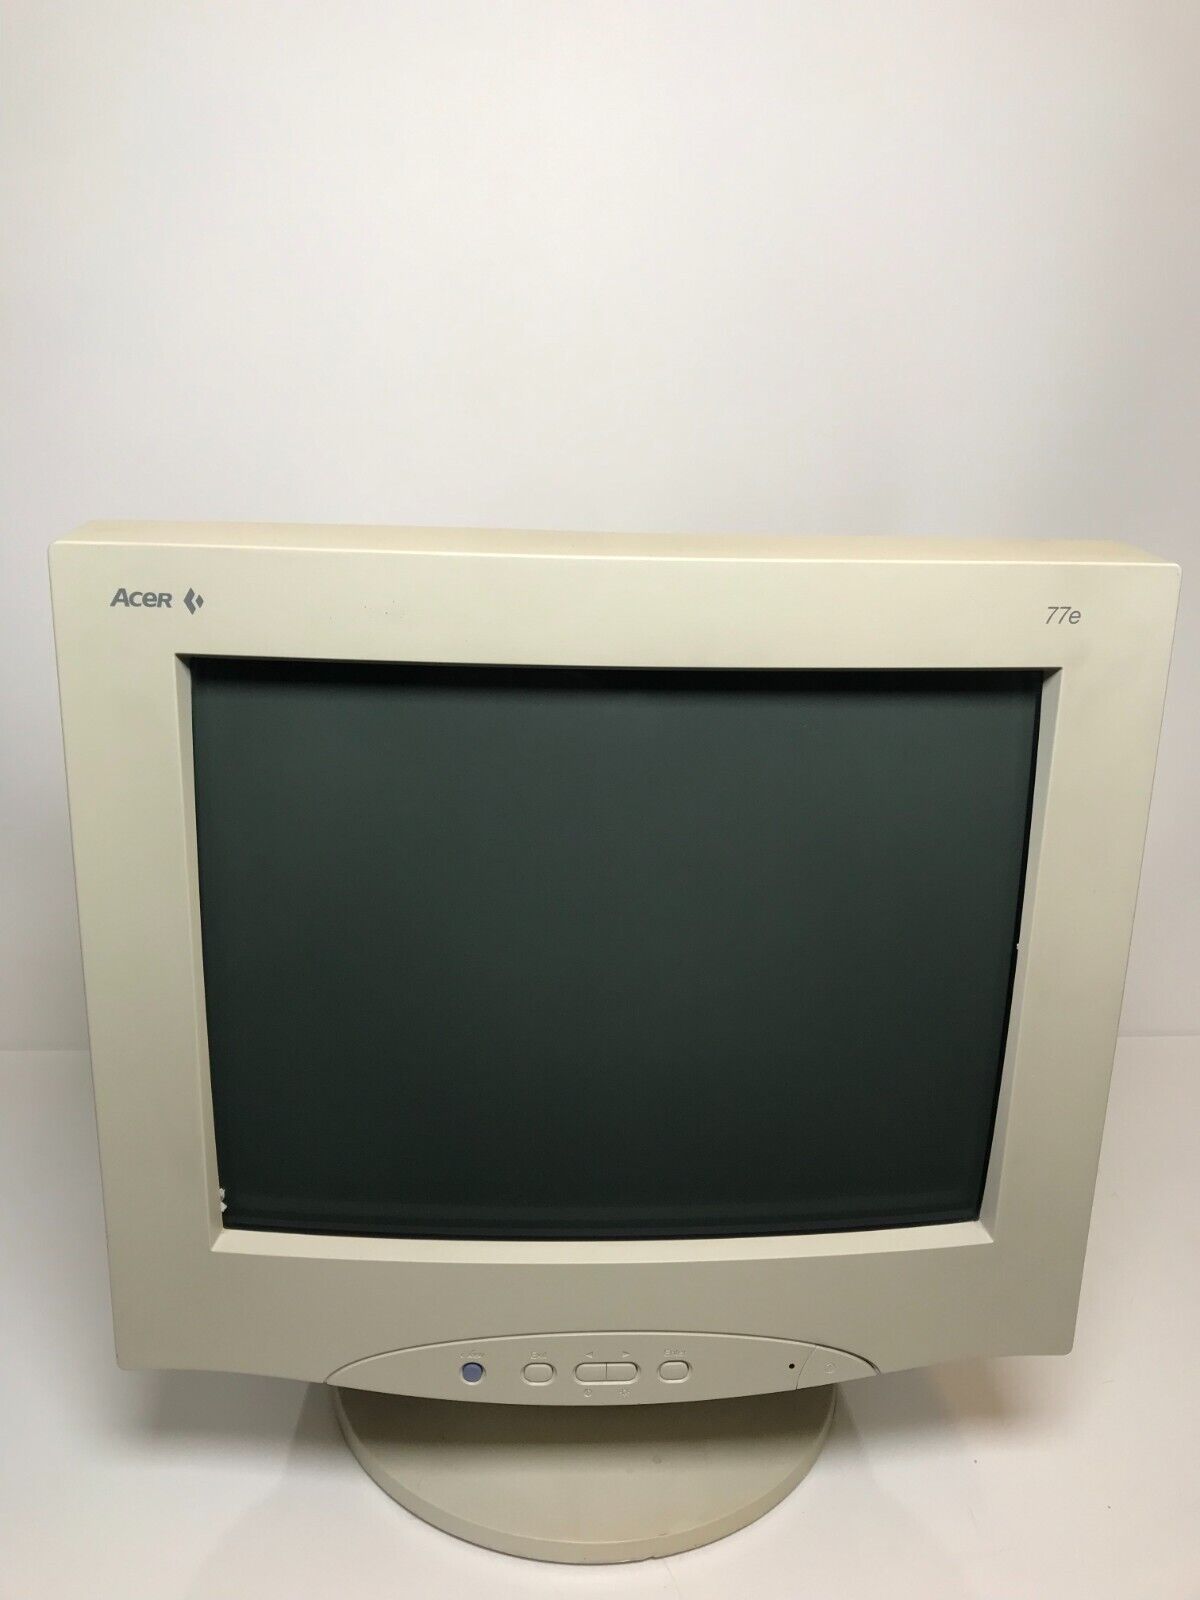 Acer Model 7277e Acerview Color Monitor Vintage PC